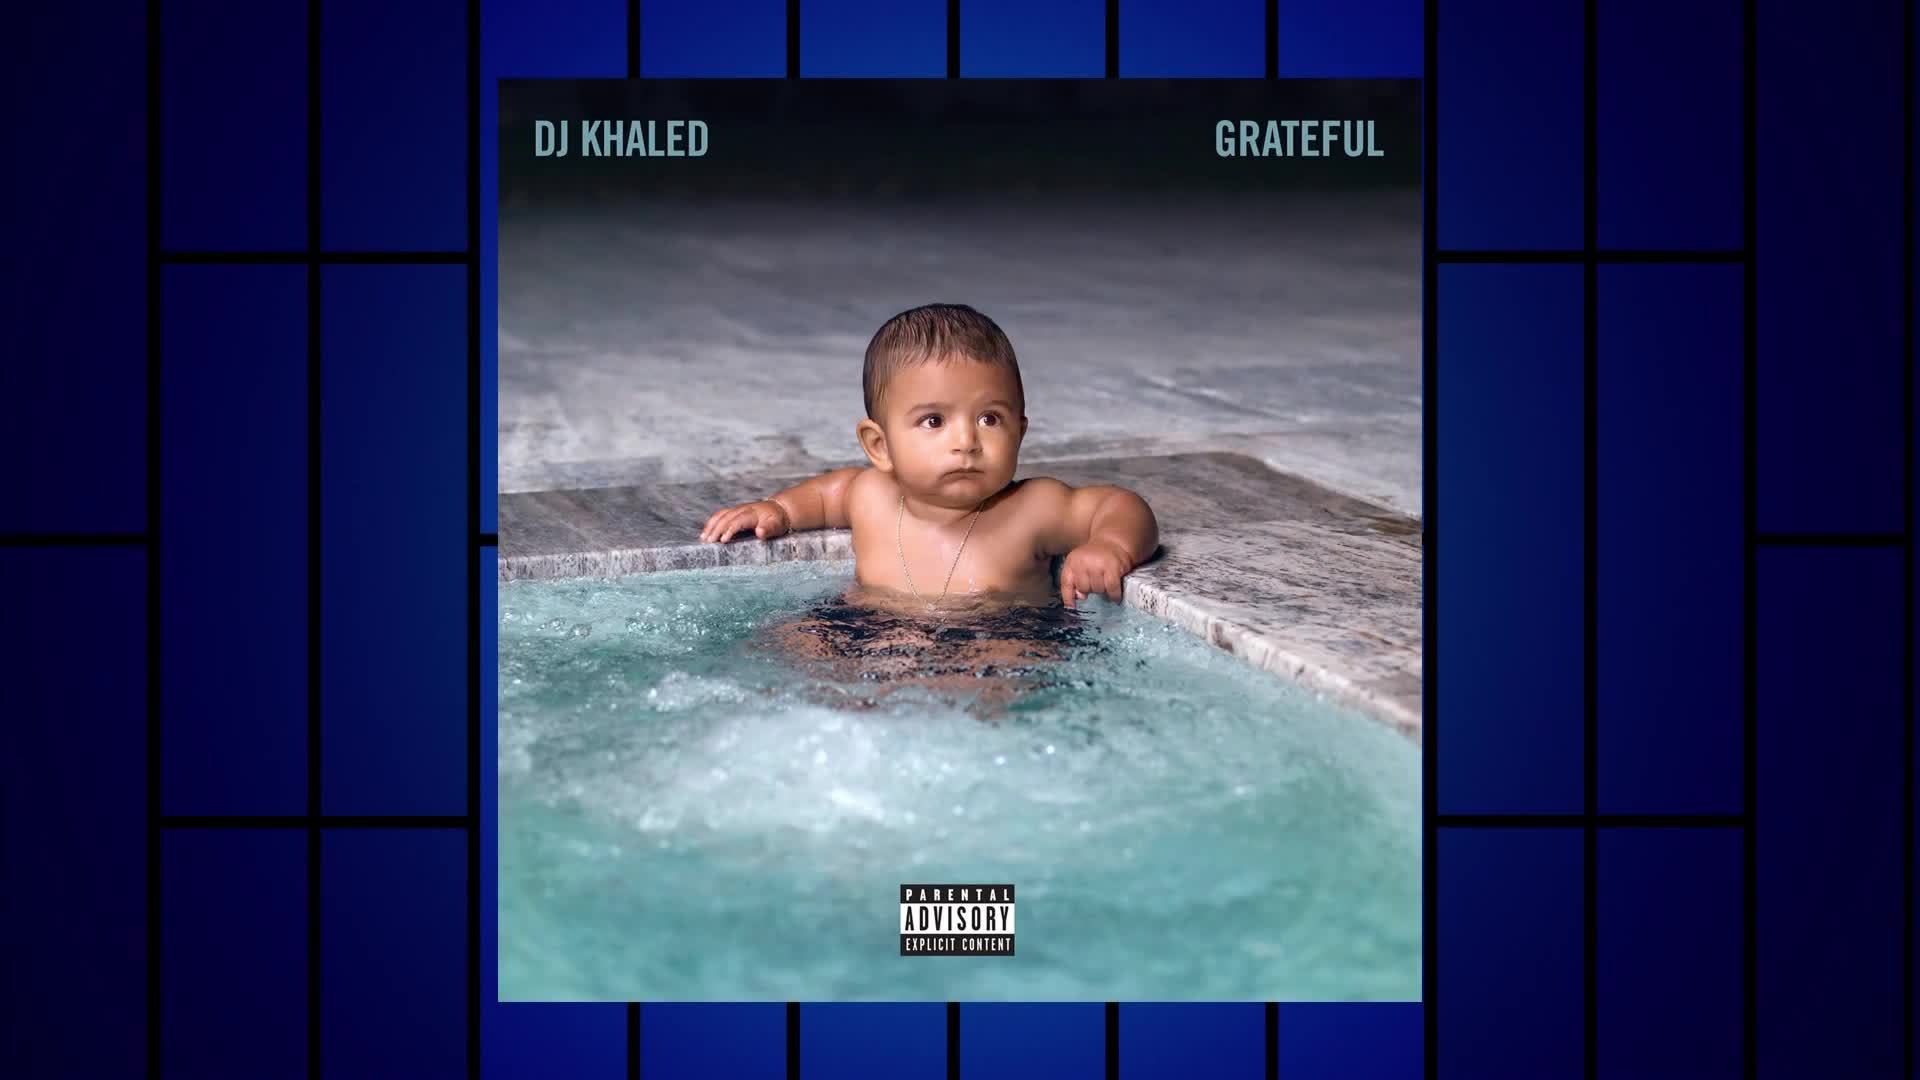 DJ Khaled Grateful: EW album review